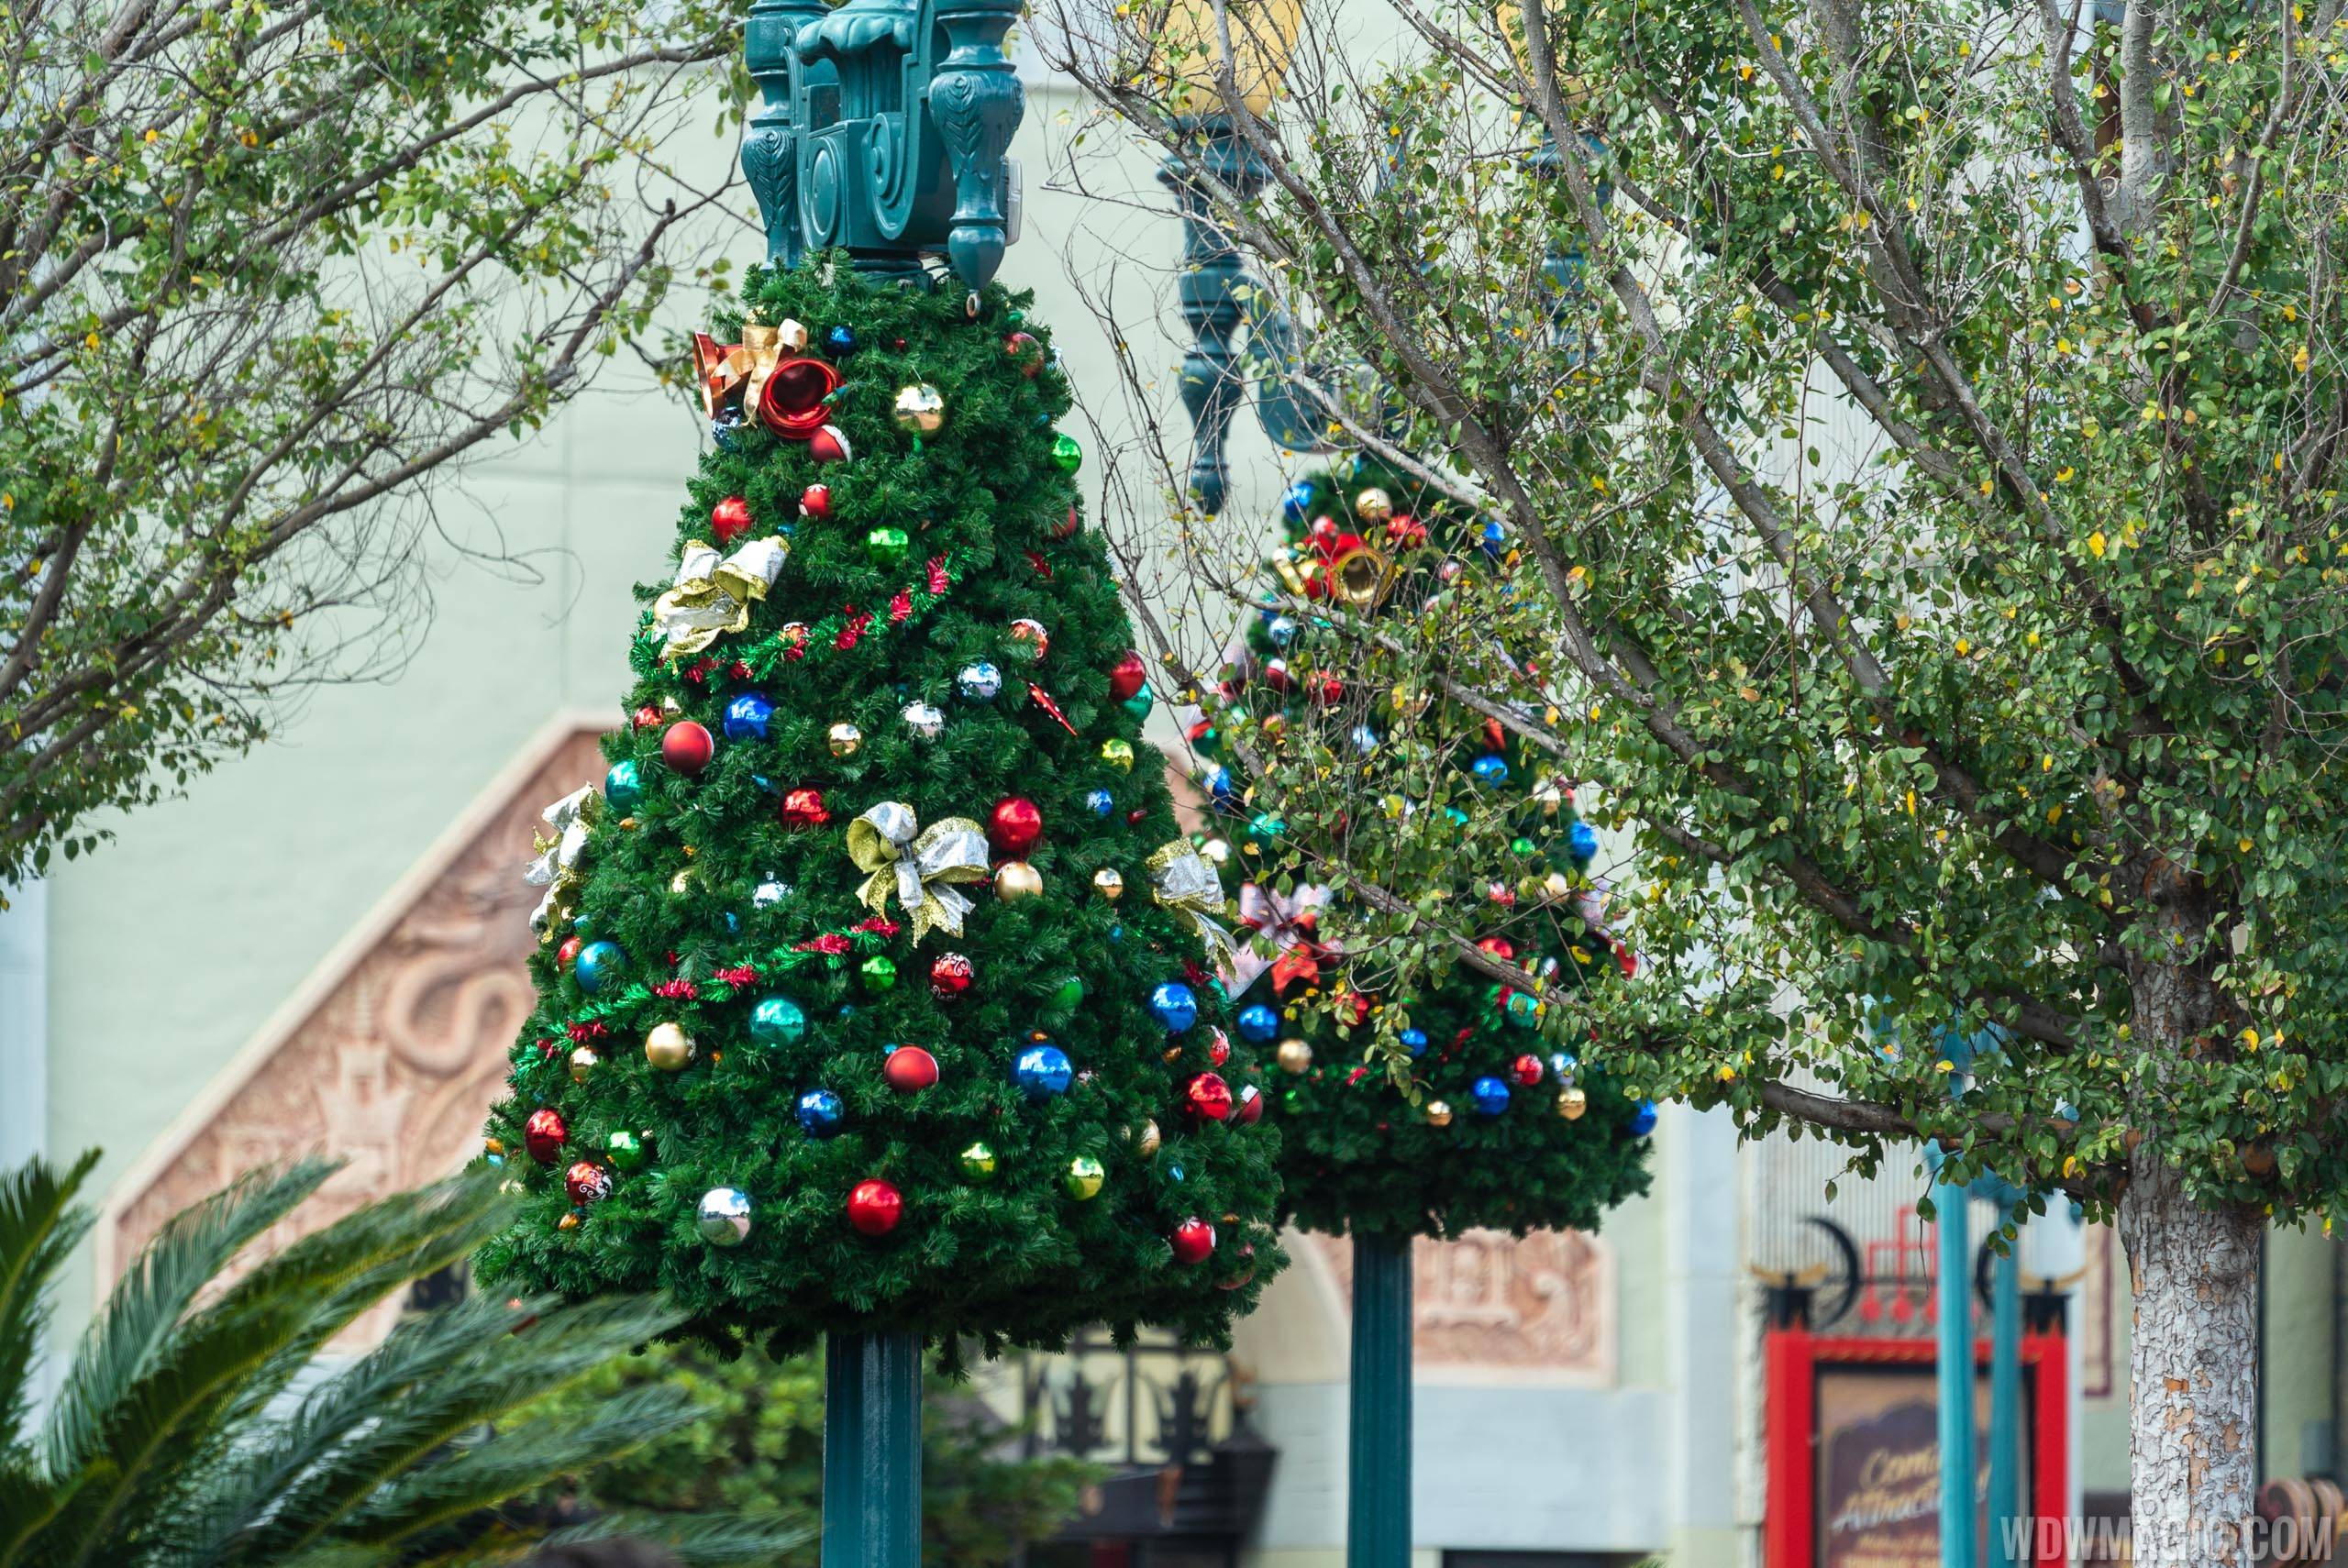 2019 Holiday Decorations at Disney's Hollywood Studios